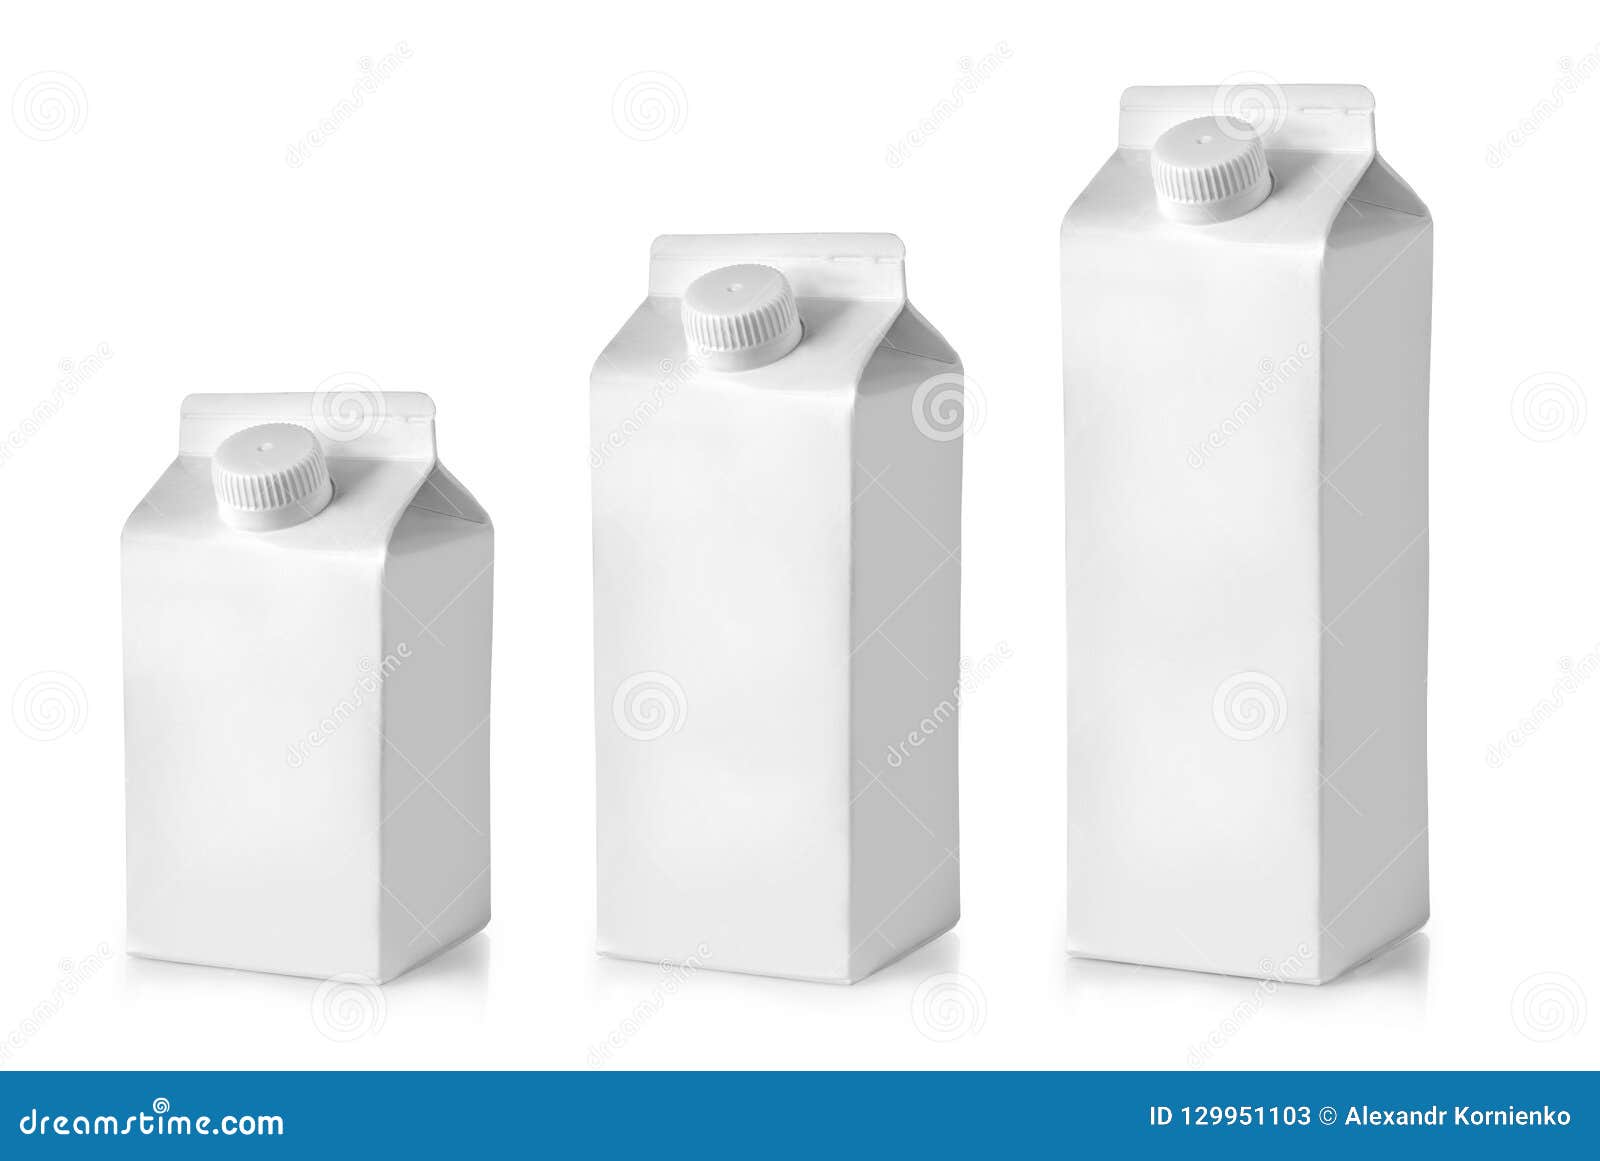 carton of milk. carton package.